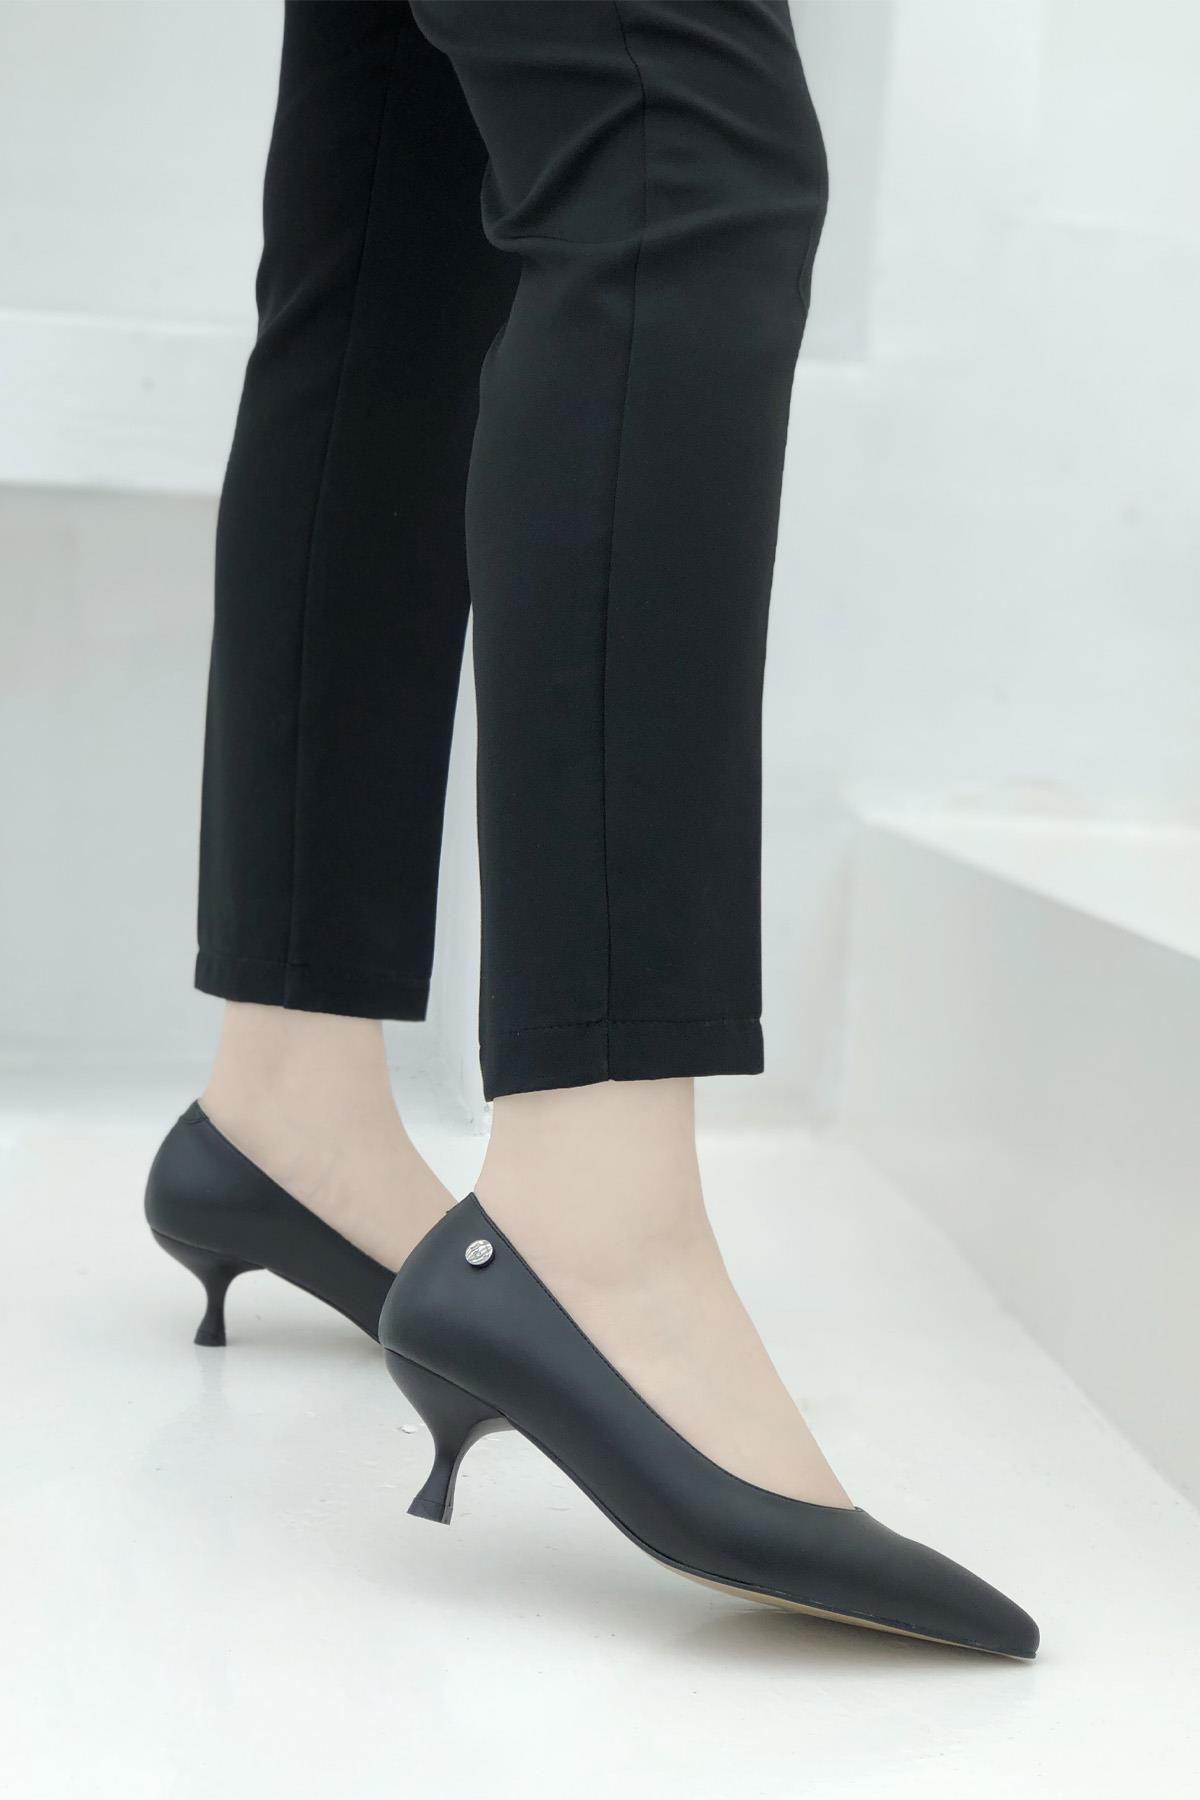 İnci Trudy 3FX Kadın Ayakkabı Siyah | My Bella Shoes